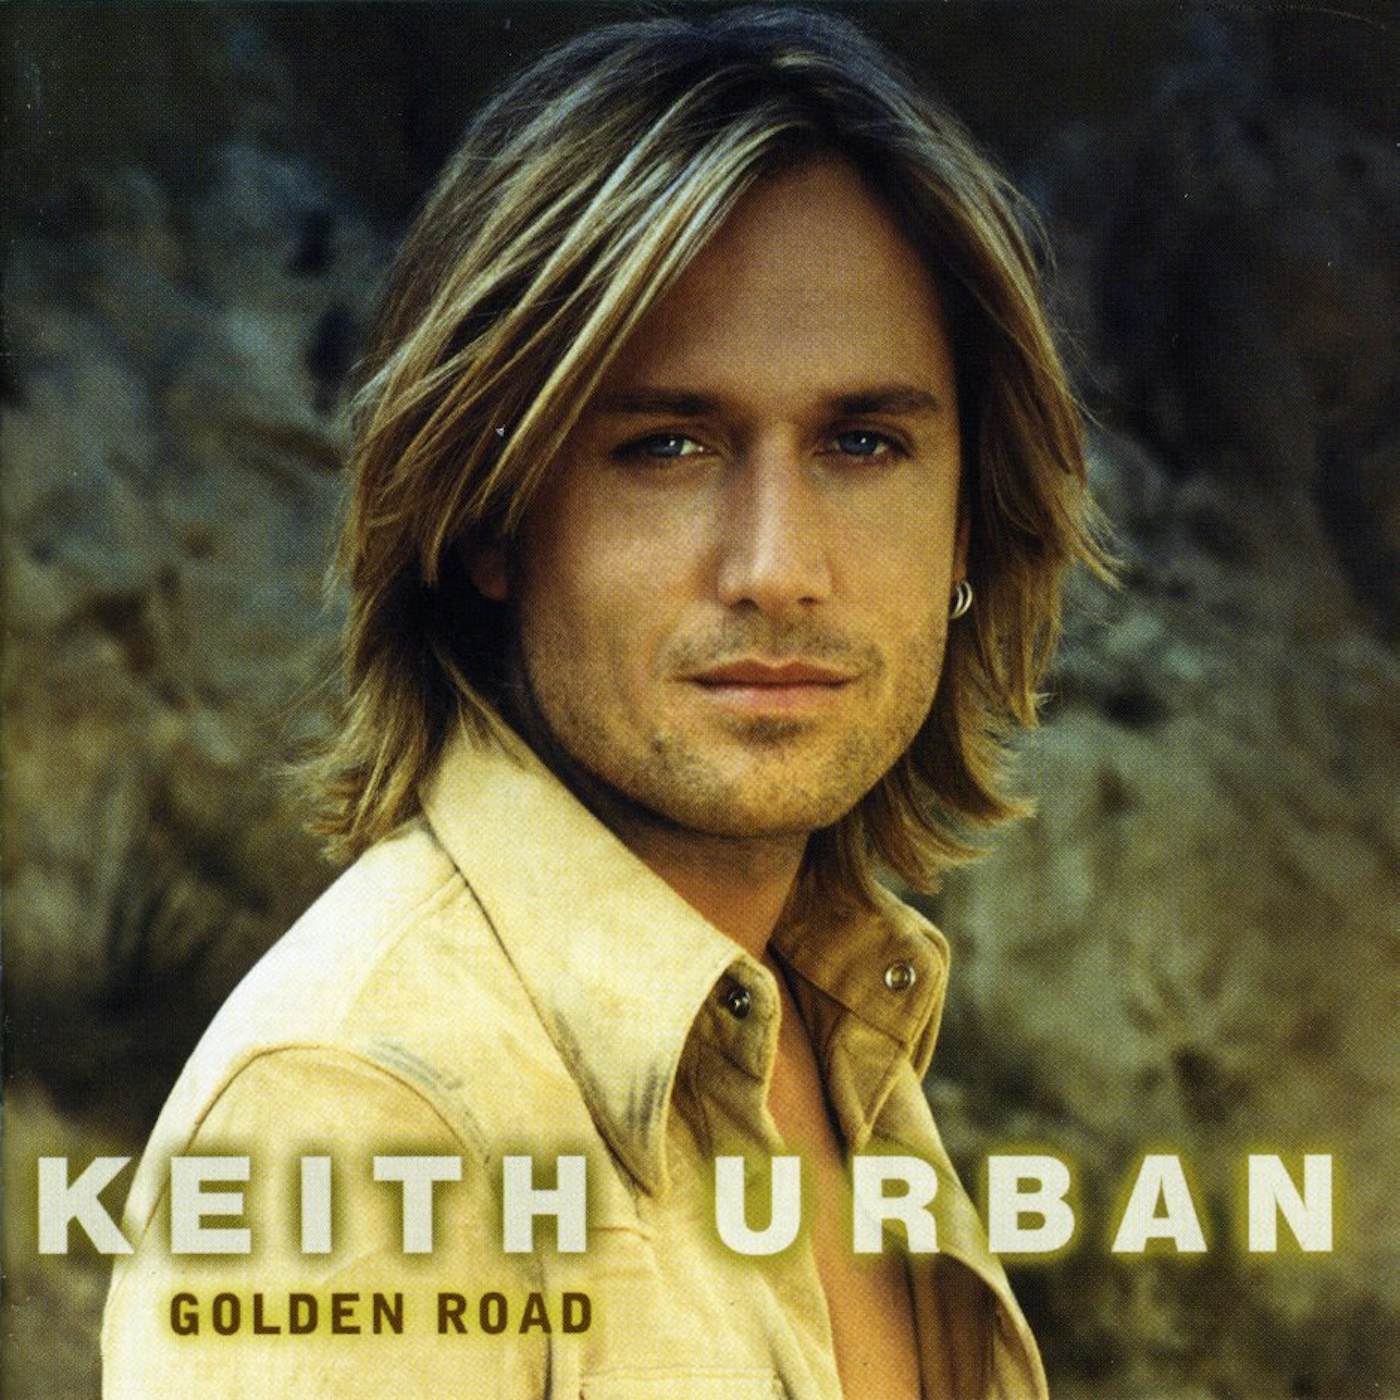 Keith Urban GOLDEN ROAD CD